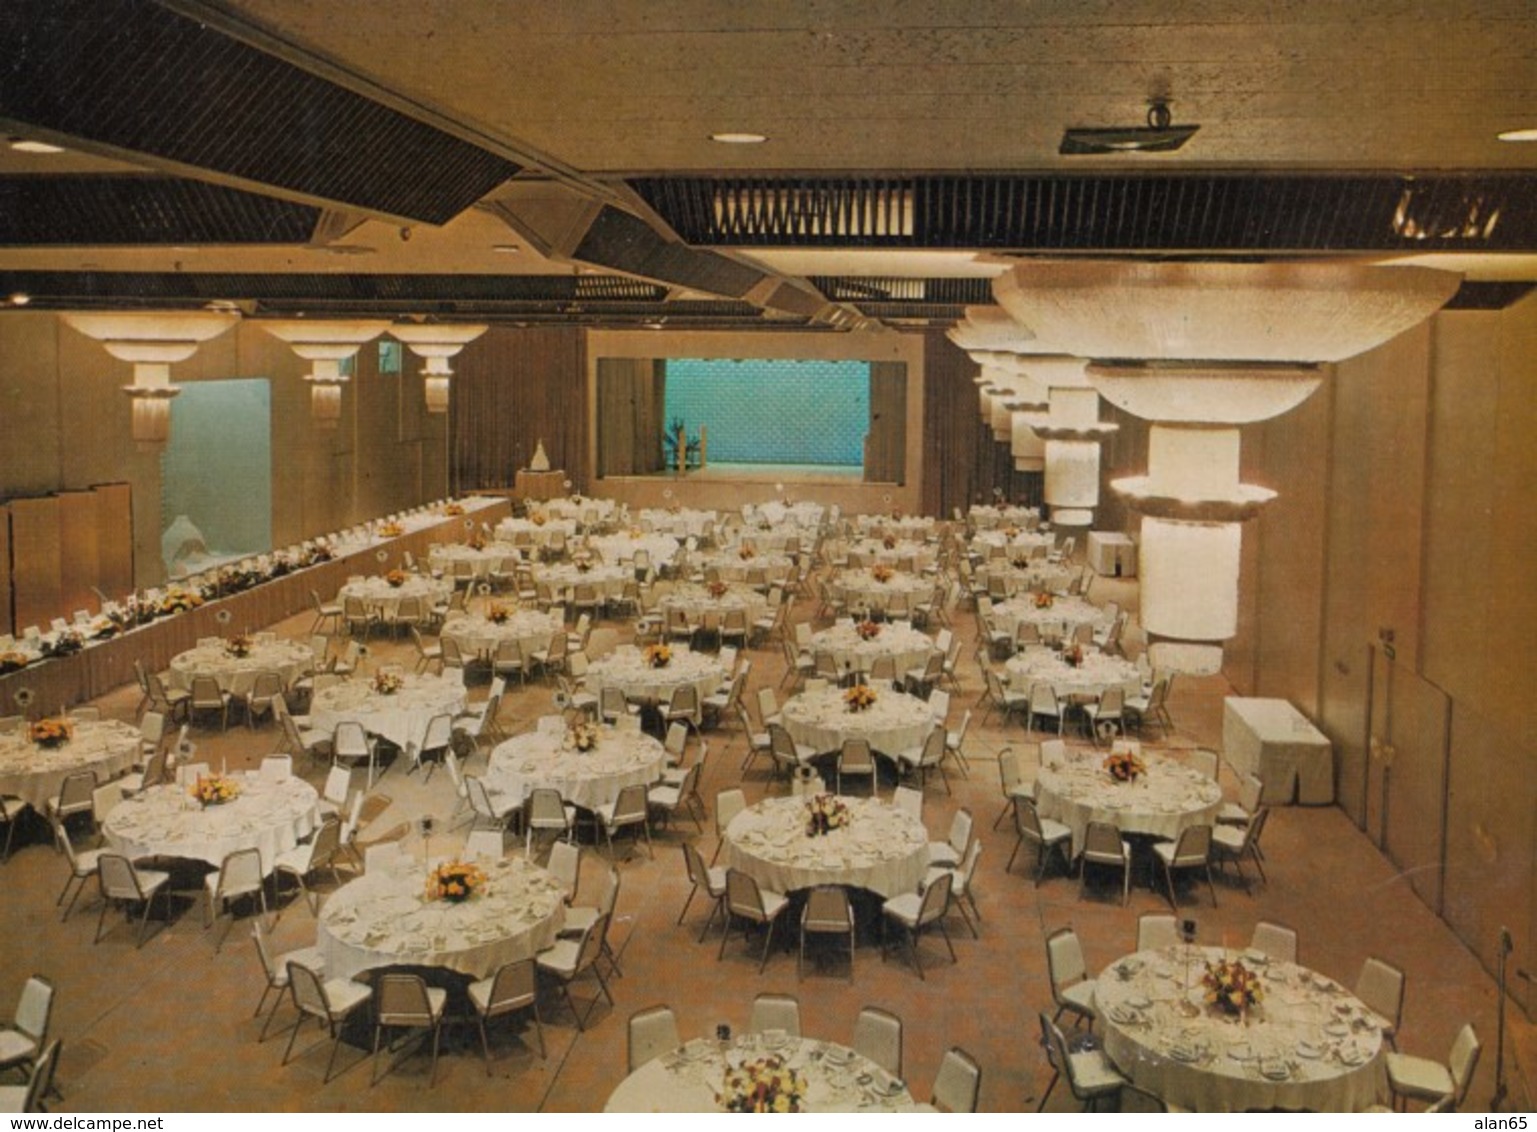 Tokyo Japan, Hilton Hote, Interior View Pearl Ballroom Banquet Facility, C1960s/70s Vintage Postcard - Tokio